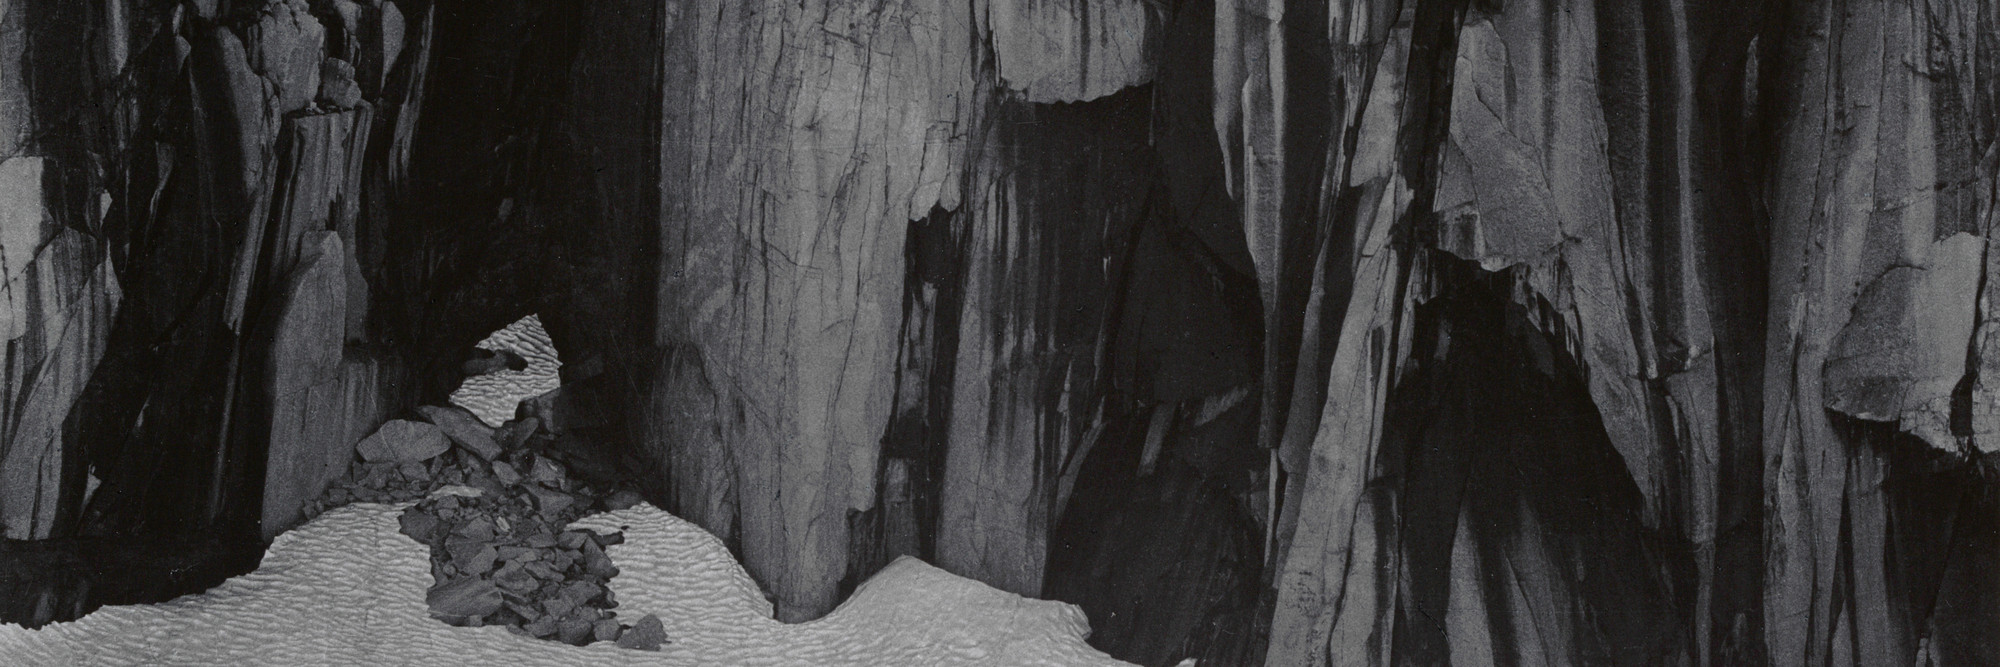 Ansel Adams. Ice and Cliffs, Kaweah Gap, California. 1932, print 1963. Gelatin silver print. Purchase. © 2016 The Ansel Adams Publishing Rights Trust